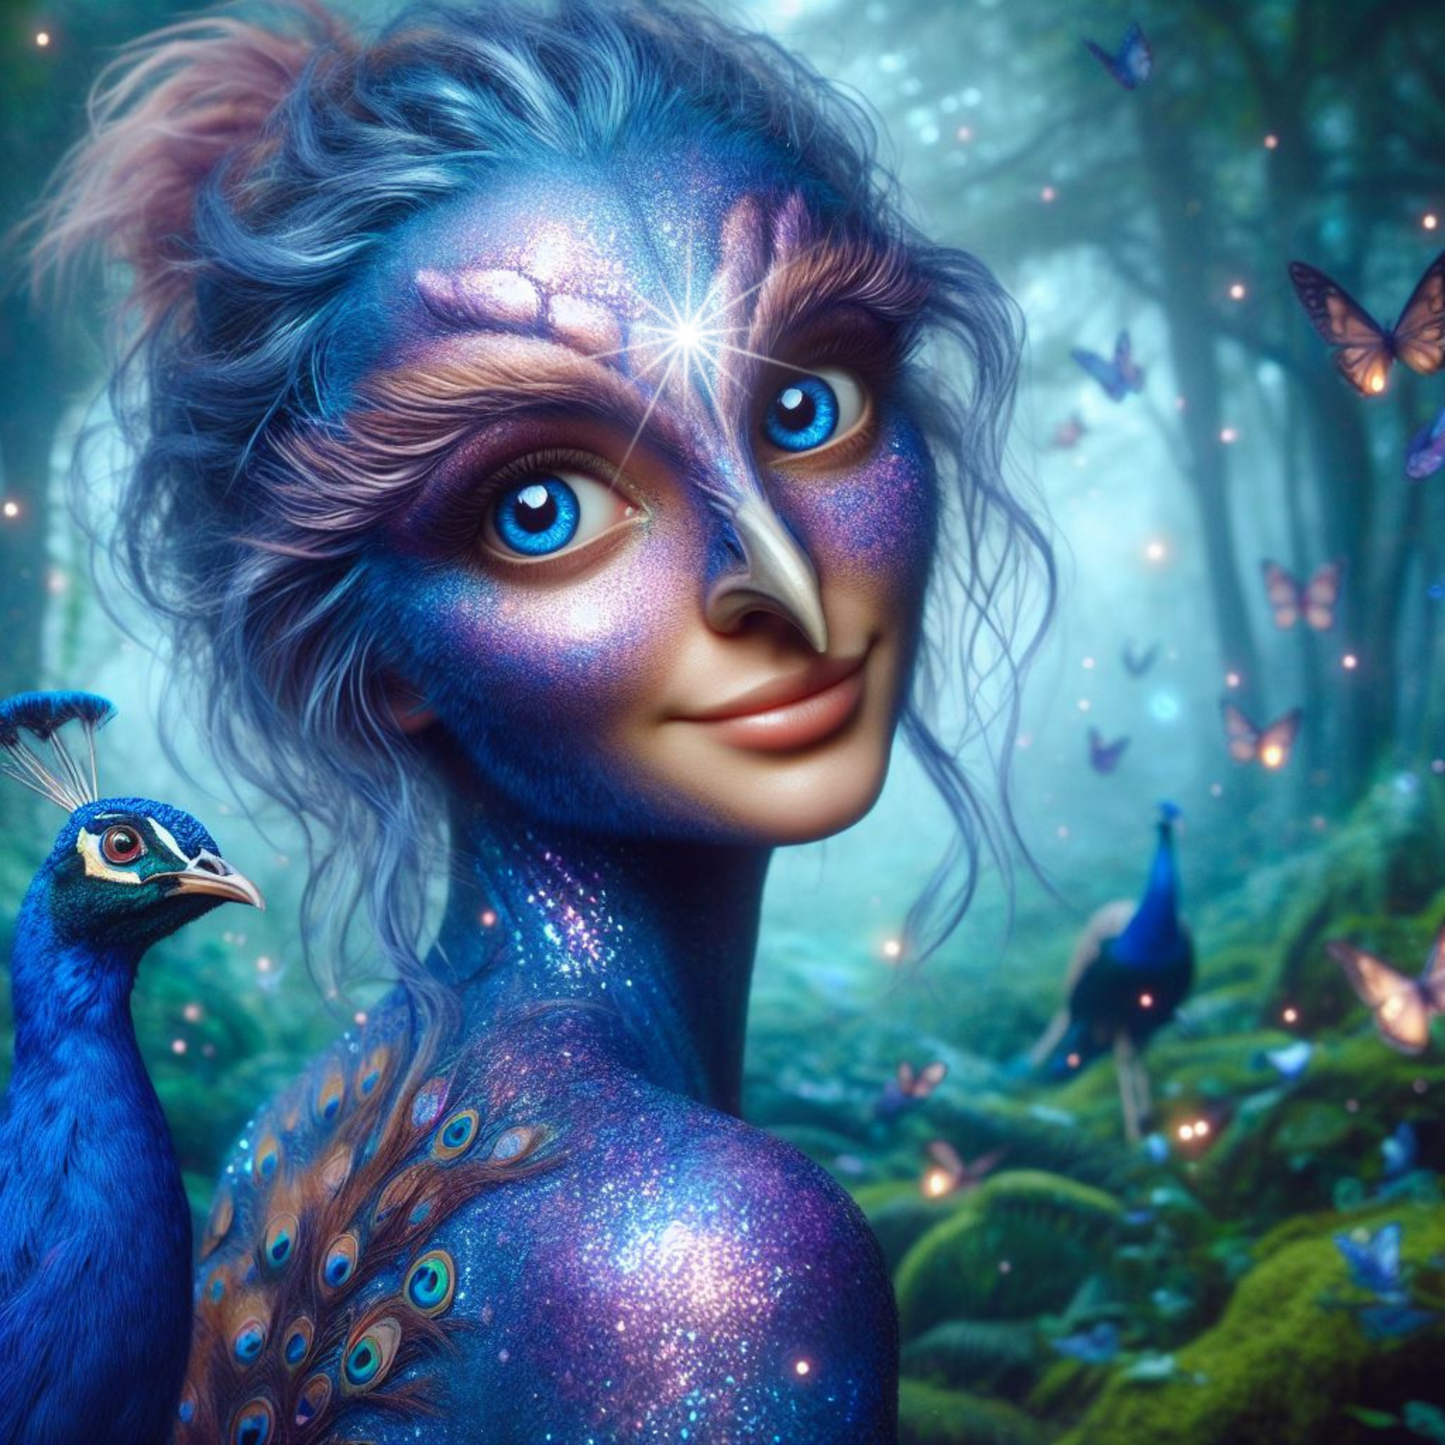 Rainforest Dreams: A cosmic meditation through the rainforest with Alpha Centauri's vitalizing light language